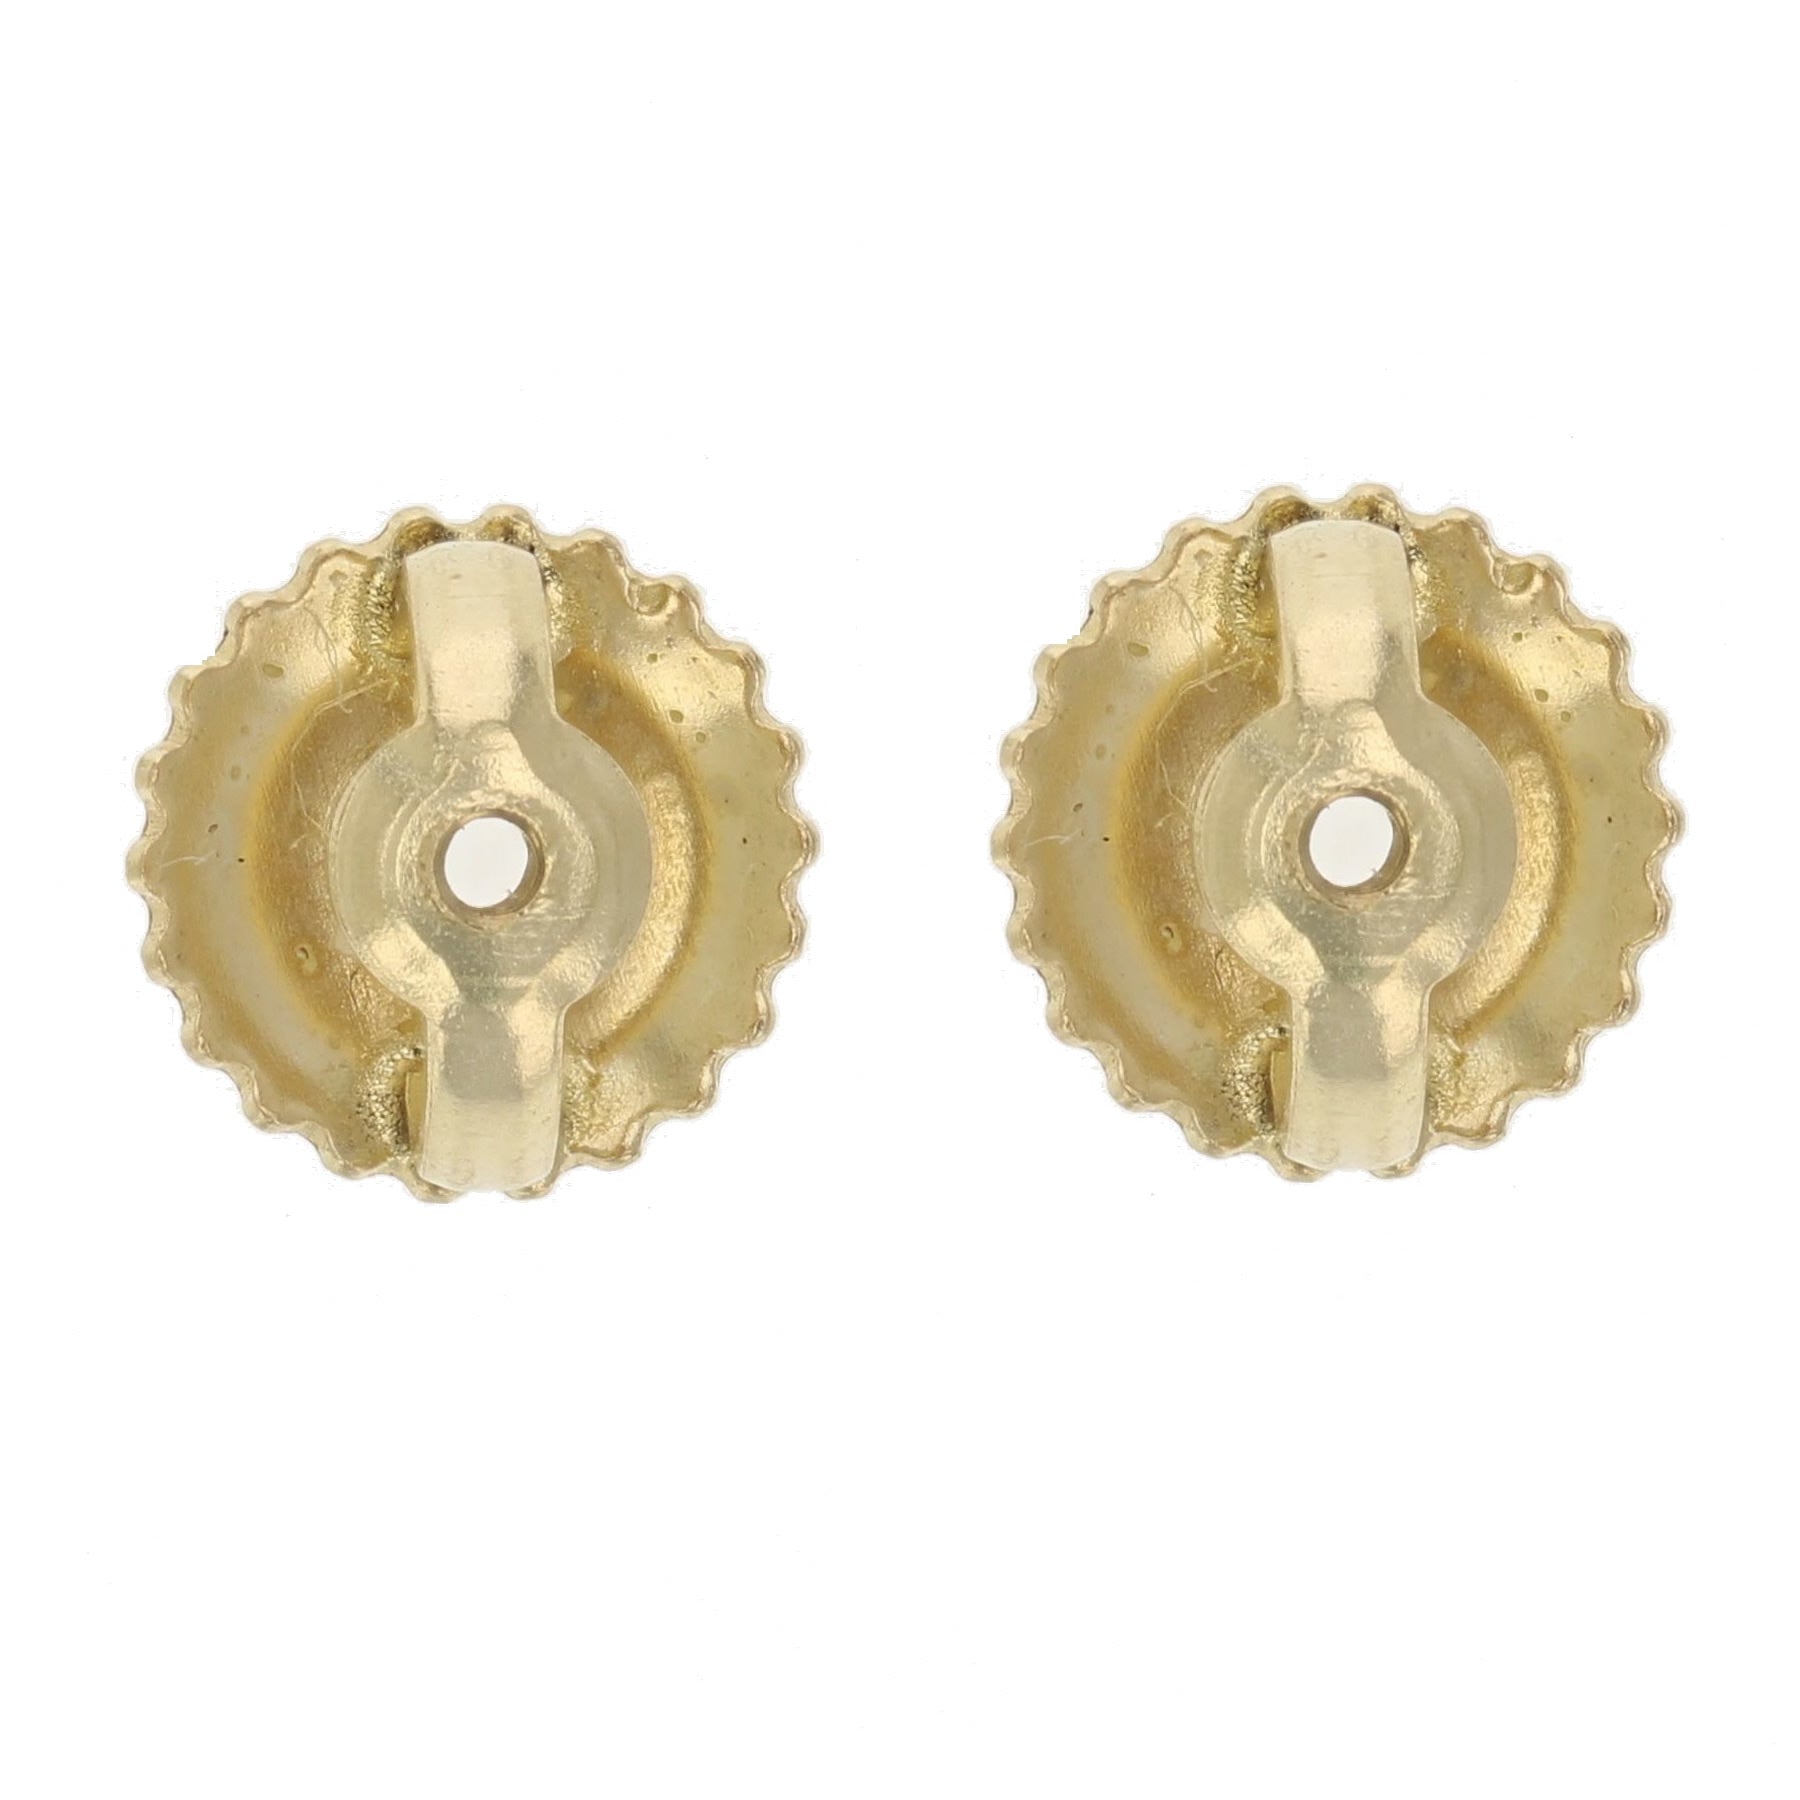  Vir Jewels 14K White Gold Screw Backs Replacement for Stud  Earrings (1 Pair) : Vir Jewels: Clothing, Shoes & Jewelry